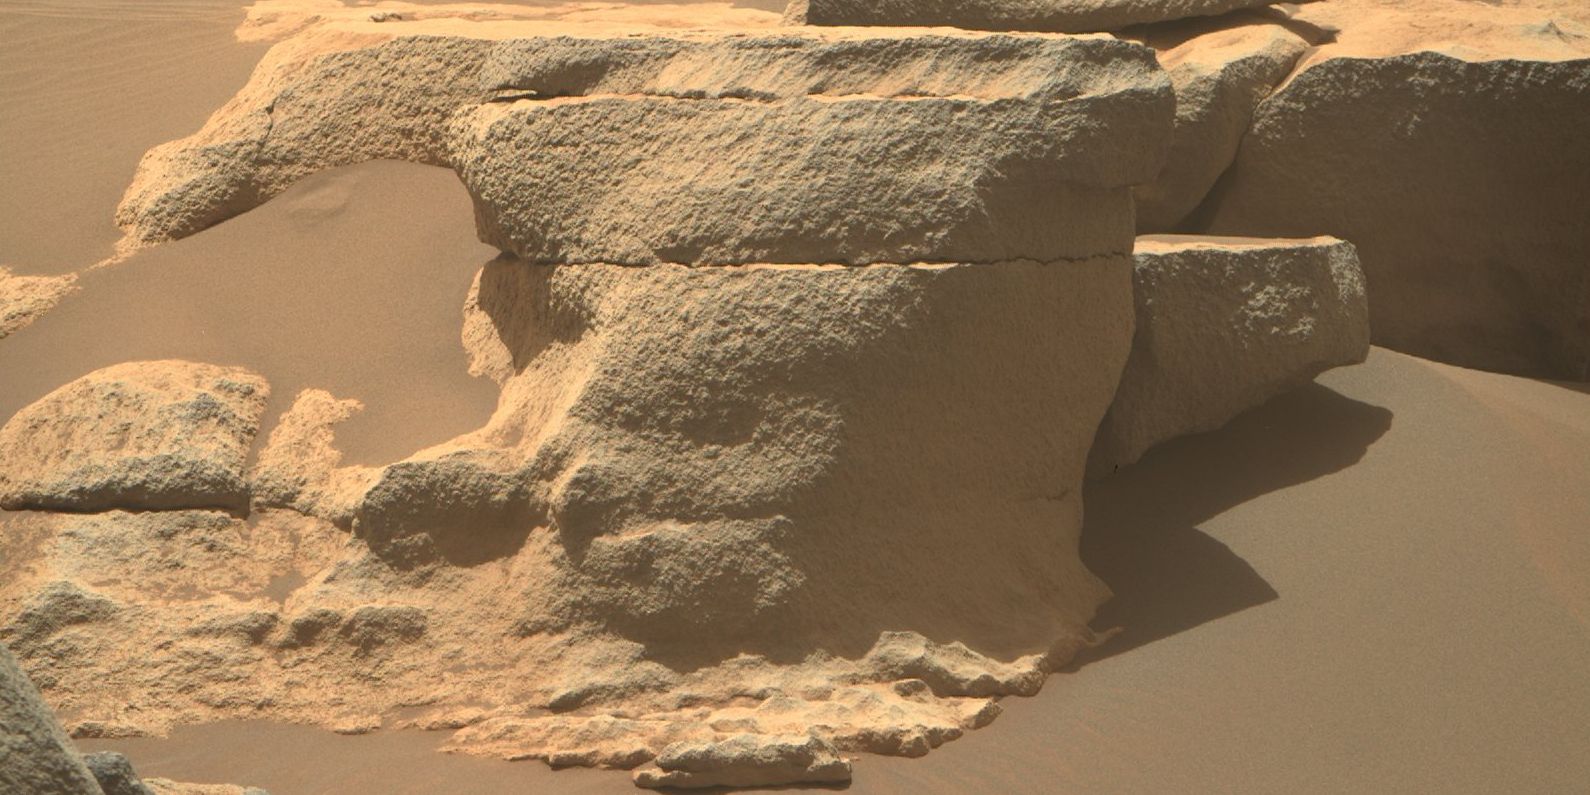 Bastide rock on Mars